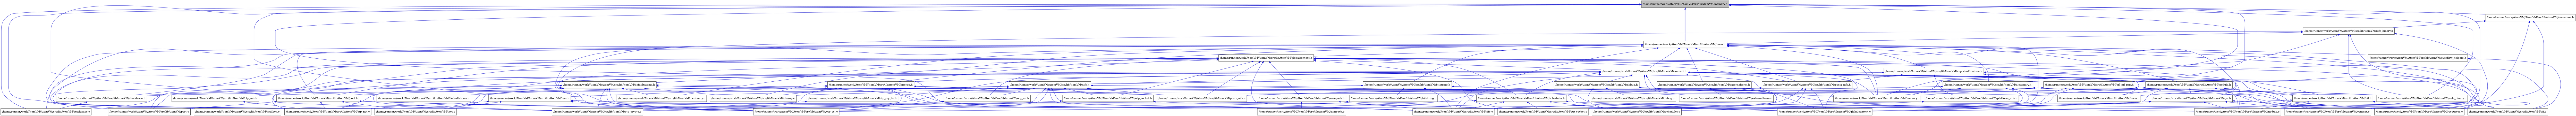 digraph {
    graph [bgcolor="#00000000"]
    node [shape=rectangle style=filled fillcolor="#FFFFFF" font=Helvetica padding=2]
    edge [color="#1414CE"]
    "21" [label="/home/runner/work/AtomVM/AtomVM/src/libAtomVM/bif.c" tooltip="/home/runner/work/AtomVM/AtomVM/src/libAtomVM/bif.c"]
    "46" [label="/home/runner/work/AtomVM/AtomVM/src/libAtomVM/dictionary.c" tooltip="/home/runner/work/AtomVM/AtomVM/src/libAtomVM/dictionary.c"]
    "27" [label="/home/runner/work/AtomVM/AtomVM/src/libAtomVM/bif.h" tooltip="/home/runner/work/AtomVM/AtomVM/src/libAtomVM/bif.h"]
    "47" [label="/home/runner/work/AtomVM/AtomVM/src/libAtomVM/dictionary.h" tooltip="/home/runner/work/AtomVM/AtomVM/src/libAtomVM/dictionary.h"]
    "23" [label="/home/runner/work/AtomVM/AtomVM/src/libAtomVM/bitstring.c" tooltip="/home/runner/work/AtomVM/AtomVM/src/libAtomVM/bitstring.c"]
    "22" [label="/home/runner/work/AtomVM/AtomVM/src/libAtomVM/bitstring.h" tooltip="/home/runner/work/AtomVM/AtomVM/src/libAtomVM/bitstring.h"]
    "36" [label="/home/runner/work/AtomVM/AtomVM/src/libAtomVM/platform_nifs.h" tooltip="/home/runner/work/AtomVM/AtomVM/src/libAtomVM/platform_nifs.h"]
    "8" [label="/home/runner/work/AtomVM/AtomVM/src/libAtomVM/posix_nifs.c" tooltip="/home/runner/work/AtomVM/AtomVM/src/libAtomVM/posix_nifs.c"]
    "49" [label="/home/runner/work/AtomVM/AtomVM/src/libAtomVM/posix_nifs.h" tooltip="/home/runner/work/AtomVM/AtomVM/src/libAtomVM/posix_nifs.h"]
    "55" [label="/home/runner/work/AtomVM/AtomVM/src/libAtomVM/defaultatoms.c" tooltip="/home/runner/work/AtomVM/AtomVM/src/libAtomVM/defaultatoms.c"]
    "54" [label="/home/runner/work/AtomVM/AtomVM/src/libAtomVM/defaultatoms.h" tooltip="/home/runner/work/AtomVM/AtomVM/src/libAtomVM/defaultatoms.h"]
    "12" [label="/home/runner/work/AtomVM/AtomVM/src/libAtomVM/inet.c" tooltip="/home/runner/work/AtomVM/AtomVM/src/libAtomVM/inet.c"]
    "11" [label="/home/runner/work/AtomVM/AtomVM/src/libAtomVM/inet.h" tooltip="/home/runner/work/AtomVM/AtomVM/src/libAtomVM/inet.h"]
    "31" [label="/home/runner/work/AtomVM/AtomVM/src/libAtomVM/scheduler.c" tooltip="/home/runner/work/AtomVM/AtomVM/src/libAtomVM/scheduler.c"]
    "45" [label="/home/runner/work/AtomVM/AtomVM/src/libAtomVM/scheduler.h" tooltip="/home/runner/work/AtomVM/AtomVM/src/libAtomVM/scheduler.h"]
    "48" [label="/home/runner/work/AtomVM/AtomVM/src/libAtomVM/exportedfunction.h" tooltip="/home/runner/work/AtomVM/AtomVM/src/libAtomVM/exportedfunction.h"]
    "3" [label="/home/runner/work/AtomVM/AtomVM/src/libAtomVM/context.c" tooltip="/home/runner/work/AtomVM/AtomVM/src/libAtomVM/context.c"]
    "26" [label="/home/runner/work/AtomVM/AtomVM/src/libAtomVM/context.h" tooltip="/home/runner/work/AtomVM/AtomVM/src/libAtomVM/context.h"]
    "17" [label="/home/runner/work/AtomVM/AtomVM/src/libAtomVM/port.c" tooltip="/home/runner/work/AtomVM/AtomVM/src/libAtomVM/port.c"]
    "16" [label="/home/runner/work/AtomVM/AtomVM/src/libAtomVM/port.h" tooltip="/home/runner/work/AtomVM/AtomVM/src/libAtomVM/port.h"]
    "56" [label="/home/runner/work/AtomVM/AtomVM/src/libAtomVM/overflow_helpers.h" tooltip="/home/runner/work/AtomVM/AtomVM/src/libAtomVM/overflow_helpers.h"]
    "38" [label="/home/runner/work/AtomVM/AtomVM/src/libAtomVM/stacktrace.c" tooltip="/home/runner/work/AtomVM/AtomVM/src/libAtomVM/stacktrace.c"]
    "37" [label="/home/runner/work/AtomVM/AtomVM/src/libAtomVM/stacktrace.h" tooltip="/home/runner/work/AtomVM/AtomVM/src/libAtomVM/stacktrace.h"]
    "9" [label="/home/runner/work/AtomVM/AtomVM/src/libAtomVM/refc_binary.c" tooltip="/home/runner/work/AtomVM/AtomVM/src/libAtomVM/refc_binary.c"]
    "19" [label="/home/runner/work/AtomVM/AtomVM/src/libAtomVM/refc_binary.h" tooltip="/home/runner/work/AtomVM/AtomVM/src/libAtomVM/refc_binary.h"]
    "14" [label="/home/runner/work/AtomVM/AtomVM/src/libAtomVM/mailbox.c" tooltip="/home/runner/work/AtomVM/AtomVM/src/libAtomVM/mailbox.c"]
    "28" [label="/home/runner/work/AtomVM/AtomVM/src/libAtomVM/module.c" tooltip="/home/runner/work/AtomVM/AtomVM/src/libAtomVM/module.c"]
    "35" [label="/home/runner/work/AtomVM/AtomVM/src/libAtomVM/module.h" tooltip="/home/runner/work/AtomVM/AtomVM/src/libAtomVM/module.h"]
    "53" [label="/home/runner/work/AtomVM/AtomVM/src/libAtomVM/avmpack.c" tooltip="/home/runner/work/AtomVM/AtomVM/src/libAtomVM/avmpack.c"]
    "52" [label="/home/runner/work/AtomVM/AtomVM/src/libAtomVM/avmpack.h" tooltip="/home/runner/work/AtomVM/AtomVM/src/libAtomVM/avmpack.h"]
    "34" [label="/home/runner/work/AtomVM/AtomVM/src/libAtomVM/term.c" tooltip="/home/runner/work/AtomVM/AtomVM/src/libAtomVM/term.c"]
    "20" [label="/home/runner/work/AtomVM/AtomVM/src/libAtomVM/term.h" tooltip="/home/runner/work/AtomVM/AtomVM/src/libAtomVM/term.h"]
    "25" [label="/home/runner/work/AtomVM/AtomVM/src/libAtomVM/interop.c" tooltip="/home/runner/work/AtomVM/AtomVM/src/libAtomVM/interop.c"]
    "7" [label="/home/runner/work/AtomVM/AtomVM/src/libAtomVM/otp_ssl.c" tooltip="/home/runner/work/AtomVM/AtomVM/src/libAtomVM/otp_ssl.c"]
    "32" [label="/home/runner/work/AtomVM/AtomVM/src/libAtomVM/interop.h" tooltip="/home/runner/work/AtomVM/AtomVM/src/libAtomVM/interop.h"]
    "44" [label="/home/runner/work/AtomVM/AtomVM/src/libAtomVM/otp_ssl.h" tooltip="/home/runner/work/AtomVM/AtomVM/src/libAtomVM/otp_ssl.h"]
    "10" [label="/home/runner/work/AtomVM/AtomVM/src/libAtomVM/resources.c" tooltip="/home/runner/work/AtomVM/AtomVM/src/libAtomVM/resources.c"]
    "18" [label="/home/runner/work/AtomVM/AtomVM/src/libAtomVM/resources.h" tooltip="/home/runner/work/AtomVM/AtomVM/src/libAtomVM/resources.h"]
    "33" [label="/home/runner/work/AtomVM/AtomVM/src/libAtomVM/otp_crypto.c" tooltip="/home/runner/work/AtomVM/AtomVM/src/libAtomVM/otp_crypto.c"]
    "41" [label="/home/runner/work/AtomVM/AtomVM/src/libAtomVM/otp_crypto.h" tooltip="/home/runner/work/AtomVM/AtomVM/src/libAtomVM/otp_crypto.h"]
    "13" [label="/home/runner/work/AtomVM/AtomVM/src/libAtomVM/otp_net.c" tooltip="/home/runner/work/AtomVM/AtomVM/src/libAtomVM/otp_net.c"]
    "42" [label="/home/runner/work/AtomVM/AtomVM/src/libAtomVM/otp_net.h" tooltip="/home/runner/work/AtomVM/AtomVM/src/libAtomVM/otp_net.h"]
    "2" [label="/home/runner/work/AtomVM/AtomVM/src/libAtomVM/erl_nif_priv.h" tooltip="/home/runner/work/AtomVM/AtomVM/src/libAtomVM/erl_nif_priv.h"]
    "39" [label="/home/runner/work/AtomVM/AtomVM/src/libAtomVM/sys.h" tooltip="/home/runner/work/AtomVM/AtomVM/src/libAtomVM/sys.h"]
    "15" [label="/home/runner/work/AtomVM/AtomVM/src/libAtomVM/nifs.c" tooltip="/home/runner/work/AtomVM/AtomVM/src/libAtomVM/nifs.c"]
    "40" [label="/home/runner/work/AtomVM/AtomVM/src/libAtomVM/nifs.h" tooltip="/home/runner/work/AtomVM/AtomVM/src/libAtomVM/nifs.h"]
    "30" [label="/home/runner/work/AtomVM/AtomVM/src/libAtomVM/debug.c" tooltip="/home/runner/work/AtomVM/AtomVM/src/libAtomVM/debug.c"]
    "29" [label="/home/runner/work/AtomVM/AtomVM/src/libAtomVM/debug.h" tooltip="/home/runner/work/AtomVM/AtomVM/src/libAtomVM/debug.h"]
    "4" [label="/home/runner/work/AtomVM/AtomVM/src/libAtomVM/globalcontext.c" tooltip="/home/runner/work/AtomVM/AtomVM/src/libAtomVM/globalcontext.c"]
    "51" [label="/home/runner/work/AtomVM/AtomVM/src/libAtomVM/globalcontext.h" tooltip="/home/runner/work/AtomVM/AtomVM/src/libAtomVM/globalcontext.h"]
    "5" [label="/home/runner/work/AtomVM/AtomVM/src/libAtomVM/memory.c" tooltip="/home/runner/work/AtomVM/AtomVM/src/libAtomVM/memory.c"]
    "6" [label="/home/runner/work/AtomVM/AtomVM/src/libAtomVM/otp_socket.c" tooltip="/home/runner/work/AtomVM/AtomVM/src/libAtomVM/otp_socket.c"]
    "1" [label="/home/runner/work/AtomVM/AtomVM/src/libAtomVM/memory.h" tooltip="/home/runner/work/AtomVM/AtomVM/src/libAtomVM/memory.h" fillcolor="#BFBFBF"]
    "43" [label="/home/runner/work/AtomVM/AtomVM/src/libAtomVM/otp_socket.h" tooltip="/home/runner/work/AtomVM/AtomVM/src/libAtomVM/otp_socket.h"]
    "24" [label="/home/runner/work/AtomVM/AtomVM/src/libAtomVM/externalterm.c" tooltip="/home/runner/work/AtomVM/AtomVM/src/libAtomVM/externalterm.c"]
    "50" [label="/home/runner/work/AtomVM/AtomVM/src/libAtomVM/externalterm.h" tooltip="/home/runner/work/AtomVM/AtomVM/src/libAtomVM/externalterm.h"]
    "27" -> "21" [dir=back tooltip="include"]
    "27" -> "28" [dir=back tooltip="include"]
    "27" -> "15" [dir=back tooltip="include"]
    "47" -> "21" [dir=back tooltip="include"]
    "47" -> "3" [dir=back tooltip="include"]
    "47" -> "46" [dir=back tooltip="include"]
    "47" -> "5" [dir=back tooltip="include"]
    "47" -> "15" [dir=back tooltip="include"]
    "47" -> "6" [dir=back tooltip="include"]
    "47" -> "9" [dir=back tooltip="include"]
    "22" -> "23" [dir=back tooltip="include"]
    "22" -> "24" [dir=back tooltip="include"]
    "22" -> "25" [dir=back tooltip="include"]
    "22" -> "15" [dir=back tooltip="include"]
    "36" -> "15" [dir=back tooltip="include"]
    "49" -> "4" [dir=back tooltip="include"]
    "49" -> "15" [dir=back tooltip="include"]
    "49" -> "6" [dir=back tooltip="include"]
    "49" -> "8" [dir=back tooltip="include"]
    "54" -> "21" [dir=back tooltip="include"]
    "54" -> "55" [dir=back tooltip="include"]
    "54" -> "46" [dir=back tooltip="include"]
    "54" -> "4" [dir=back tooltip="include"]
    "54" -> "25" [dir=back tooltip="include"]
    "54" -> "15" [dir=back tooltip="include"]
    "54" -> "33" [dir=back tooltip="include"]
    "54" -> "13" [dir=back tooltip="include"]
    "54" -> "6" [dir=back tooltip="include"]
    "54" -> "7" [dir=back tooltip="include"]
    "54" -> "17" [dir=back tooltip="include"]
    "54" -> "16" [dir=back tooltip="include"]
    "54" -> "8" [dir=back tooltip="include"]
    "54" -> "10" [dir=back tooltip="include"]
    "54" -> "38" [dir=back tooltip="include"]
    "11" -> "12" [dir=back tooltip="include"]
    "11" -> "13" [dir=back tooltip="include"]
    "11" -> "6" [dir=back tooltip="include"]
    "11" -> "7" [dir=back tooltip="include"]
    "45" -> "4" [dir=back tooltip="include"]
    "45" -> "14" [dir=back tooltip="include"]
    "45" -> "15" [dir=back tooltip="include"]
    "45" -> "6" [dir=back tooltip="include"]
    "45" -> "31" [dir=back tooltip="include"]
    "48" -> "27" [dir=back tooltip="include"]
    "48" -> "35" [dir=back tooltip="include"]
    "48" -> "40" [dir=back tooltip="include"]
    "48" -> "36" [dir=back tooltip="include"]
    "48" -> "49" [dir=back tooltip="include"]
    "26" -> "27" [dir=back tooltip="include"]
    "26" -> "3" [dir=back tooltip="include"]
    "26" -> "29" [dir=back tooltip="include"]
    "26" -> "2" [dir=back tooltip="include"]
    "26" -> "24" [dir=back tooltip="include"]
    "26" -> "4" [dir=back tooltip="include"]
    "26" -> "32" [dir=back tooltip="include"]
    "26" -> "5" [dir=back tooltip="include"]
    "26" -> "28" [dir=back tooltip="include"]
    "26" -> "35" [dir=back tooltip="include"]
    "26" -> "15" [dir=back tooltip="include"]
    "26" -> "40" [dir=back tooltip="include"]
    "26" -> "33" [dir=back tooltip="include"]
    "26" -> "13" [dir=back tooltip="include"]
    "26" -> "6" [dir=back tooltip="include"]
    "26" -> "7" [dir=back tooltip="include"]
    "26" -> "17" [dir=back tooltip="include"]
    "26" -> "16" [dir=back tooltip="include"]
    "26" -> "9" [dir=back tooltip="include"]
    "26" -> "10" [dir=back tooltip="include"]
    "26" -> "45" [dir=back tooltip="include"]
    "26" -> "37" [dir=back tooltip="include"]
    "26" -> "34" [dir=back tooltip="include"]
    "16" -> "12" [dir=back tooltip="include"]
    "16" -> "15" [dir=back tooltip="include"]
    "16" -> "13" [dir=back tooltip="include"]
    "16" -> "6" [dir=back tooltip="include"]
    "16" -> "7" [dir=back tooltip="include"]
    "16" -> "17" [dir=back tooltip="include"]
    "56" -> "21" [dir=back tooltip="include"]
    "37" -> "38" [dir=back tooltip="include"]
    "19" -> "4" [dir=back tooltip="include"]
    "19" -> "5" [dir=back tooltip="include"]
    "19" -> "7" [dir=back tooltip="include"]
    "19" -> "9" [dir=back tooltip="include"]
    "19" -> "10" [dir=back tooltip="include"]
    "19" -> "20" [dir=back tooltip="include"]
    "35" -> "27" [dir=back tooltip="include"]
    "35" -> "28" [dir=back tooltip="include"]
    "35" -> "15" [dir=back tooltip="include"]
    "35" -> "36" [dir=back tooltip="include"]
    "35" -> "37" [dir=back tooltip="include"]
    "35" -> "39" [dir=back tooltip="include"]
    "35" -> "34" [dir=back tooltip="include"]
    "52" -> "53" [dir=back tooltip="include"]
    "52" -> "4" [dir=back tooltip="include"]
    "52" -> "15" [dir=back tooltip="include"]
    "20" -> "21" [dir=back tooltip="include"]
    "20" -> "22" [dir=back tooltip="include"]
    "20" -> "3" [dir=back tooltip="include"]
    "20" -> "26" [dir=back tooltip="include"]
    "20" -> "46" [dir=back tooltip="include"]
    "20" -> "47" [dir=back tooltip="include"]
    "20" -> "48" [dir=back tooltip="include"]
    "20" -> "50" [dir=back tooltip="include"]
    "20" -> "51" [dir=back tooltip="include"]
    "20" -> "12" [dir=back tooltip="include"]
    "20" -> "25" [dir=back tooltip="include"]
    "20" -> "32" [dir=back tooltip="include"]
    "20" -> "5" [dir=back tooltip="include"]
    "20" -> "28" [dir=back tooltip="include"]
    "20" -> "35" [dir=back tooltip="include"]
    "20" -> "15" [dir=back tooltip="include"]
    "20" -> "33" [dir=back tooltip="include"]
    "20" -> "13" [dir=back tooltip="include"]
    "20" -> "6" [dir=back tooltip="include"]
    "20" -> "7" [dir=back tooltip="include"]
    "20" -> "56" [dir=back tooltip="include"]
    "20" -> "16" [dir=back tooltip="include"]
    "20" -> "49" [dir=back tooltip="include"]
    "20" -> "37" [dir=back tooltip="include"]
    "20" -> "34" [dir=back tooltip="include"]
    "32" -> "11" [dir=back tooltip="include"]
    "32" -> "25" [dir=back tooltip="include"]
    "32" -> "15" [dir=back tooltip="include"]
    "32" -> "33" [dir=back tooltip="include"]
    "32" -> "13" [dir=back tooltip="include"]
    "32" -> "6" [dir=back tooltip="include"]
    "32" -> "7" [dir=back tooltip="include"]
    "32" -> "8" [dir=back tooltip="include"]
    "32" -> "34" [dir=back tooltip="include"]
    "44" -> "7" [dir=back tooltip="include"]
    "18" -> "4" [dir=back tooltip="include"]
    "18" -> "19" [dir=back tooltip="include"]
    "18" -> "10" [dir=back tooltip="include"]
    "41" -> "33" [dir=back tooltip="include"]
    "42" -> "13" [dir=back tooltip="include"]
    "2" -> "3" [dir=back tooltip="include"]
    "2" -> "4" [dir=back tooltip="include"]
    "2" -> "5" [dir=back tooltip="include"]
    "2" -> "6" [dir=back tooltip="include"]
    "2" -> "7" [dir=back tooltip="include"]
    "2" -> "8" [dir=back tooltip="include"]
    "2" -> "9" [dir=back tooltip="include"]
    "2" -> "10" [dir=back tooltip="include"]
    "39" -> "3" [dir=back tooltip="include"]
    "39" -> "4" [dir=back tooltip="include"]
    "39" -> "28" [dir=back tooltip="include"]
    "39" -> "15" [dir=back tooltip="include"]
    "39" -> "6" [dir=back tooltip="include"]
    "39" -> "10" [dir=back tooltip="include"]
    "39" -> "31" [dir=back tooltip="include"]
    "40" -> "28" [dir=back tooltip="include"]
    "40" -> "15" [dir=back tooltip="include"]
    "40" -> "33" [dir=back tooltip="include"]
    "40" -> "41" [dir=back tooltip="include"]
    "40" -> "13" [dir=back tooltip="include"]
    "40" -> "42" [dir=back tooltip="include"]
    "40" -> "6" [dir=back tooltip="include"]
    "40" -> "43" [dir=back tooltip="include"]
    "40" -> "7" [dir=back tooltip="include"]
    "40" -> "44" [dir=back tooltip="include"]
    "40" -> "8" [dir=back tooltip="include"]
    "29" -> "30" [dir=back tooltip="include"]
    "29" -> "5" [dir=back tooltip="include"]
    "29" -> "31" [dir=back tooltip="include"]
    "51" -> "52" [dir=back tooltip="include"]
    "51" -> "3" [dir=back tooltip="include"]
    "51" -> "26" [dir=back tooltip="include"]
    "51" -> "54" [dir=back tooltip="include"]
    "51" -> "4" [dir=back tooltip="include"]
    "51" -> "5" [dir=back tooltip="include"]
    "51" -> "28" [dir=back tooltip="include"]
    "51" -> "35" [dir=back tooltip="include"]
    "51" -> "15" [dir=back tooltip="include"]
    "51" -> "33" [dir=back tooltip="include"]
    "51" -> "13" [dir=back tooltip="include"]
    "51" -> "42" [dir=back tooltip="include"]
    "51" -> "6" [dir=back tooltip="include"]
    "51" -> "43" [dir=back tooltip="include"]
    "51" -> "7" [dir=back tooltip="include"]
    "51" -> "44" [dir=back tooltip="include"]
    "51" -> "17" [dir=back tooltip="include"]
    "51" -> "16" [dir=back tooltip="include"]
    "51" -> "8" [dir=back tooltip="include"]
    "51" -> "49" [dir=back tooltip="include"]
    "51" -> "45" [dir=back tooltip="include"]
    "51" -> "38" [dir=back tooltip="include"]
    "51" -> "39" [dir=back tooltip="include"]
    "1" -> "2" [dir=back tooltip="include"]
    "1" -> "11" [dir=back tooltip="include"]
    "1" -> "14" [dir=back tooltip="include"]
    "1" -> "5" [dir=back tooltip="include"]
    "1" -> "15" [dir=back tooltip="include"]
    "1" -> "6" [dir=back tooltip="include"]
    "1" -> "16" [dir=back tooltip="include"]
    "1" -> "9" [dir=back tooltip="include"]
    "1" -> "18" [dir=back tooltip="include"]
    "1" -> "38" [dir=back tooltip="include"]
    "1" -> "20" [dir=back tooltip="include"]
    "43" -> "6" [dir=back tooltip="include"]
    "43" -> "7" [dir=back tooltip="include"]
    "50" -> "24" [dir=back tooltip="include"]
    "50" -> "28" [dir=back tooltip="include"]
    "50" -> "15" [dir=back tooltip="include"]
}